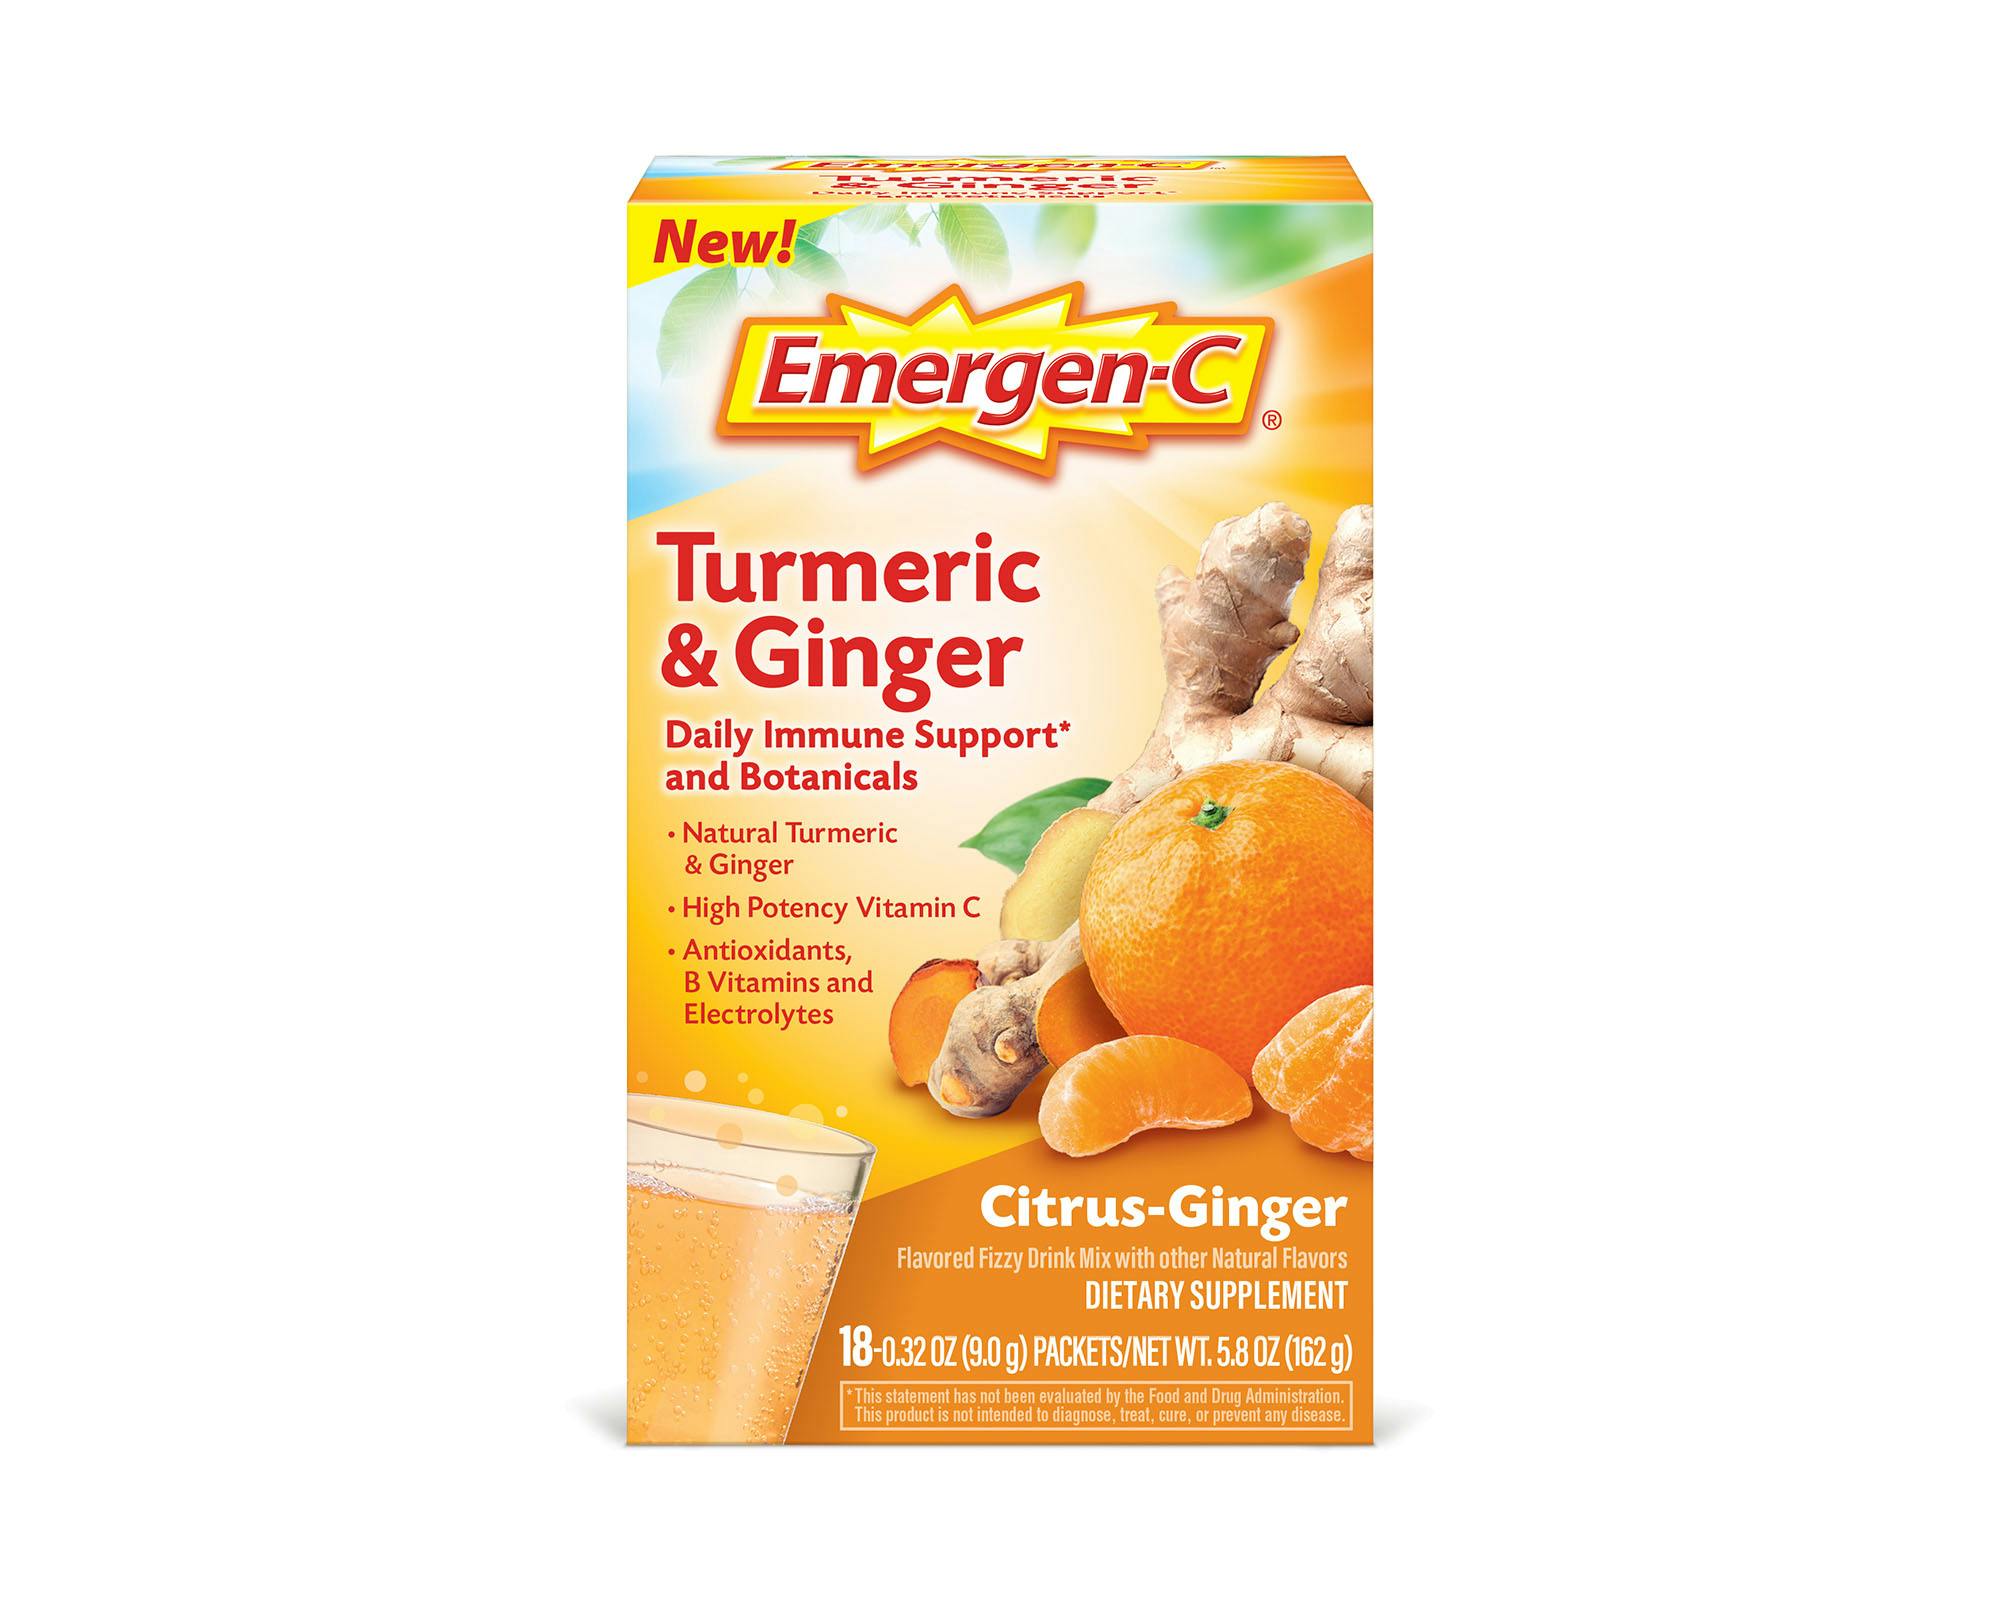 Turmeric & Ginger Botanicals Immune Support box